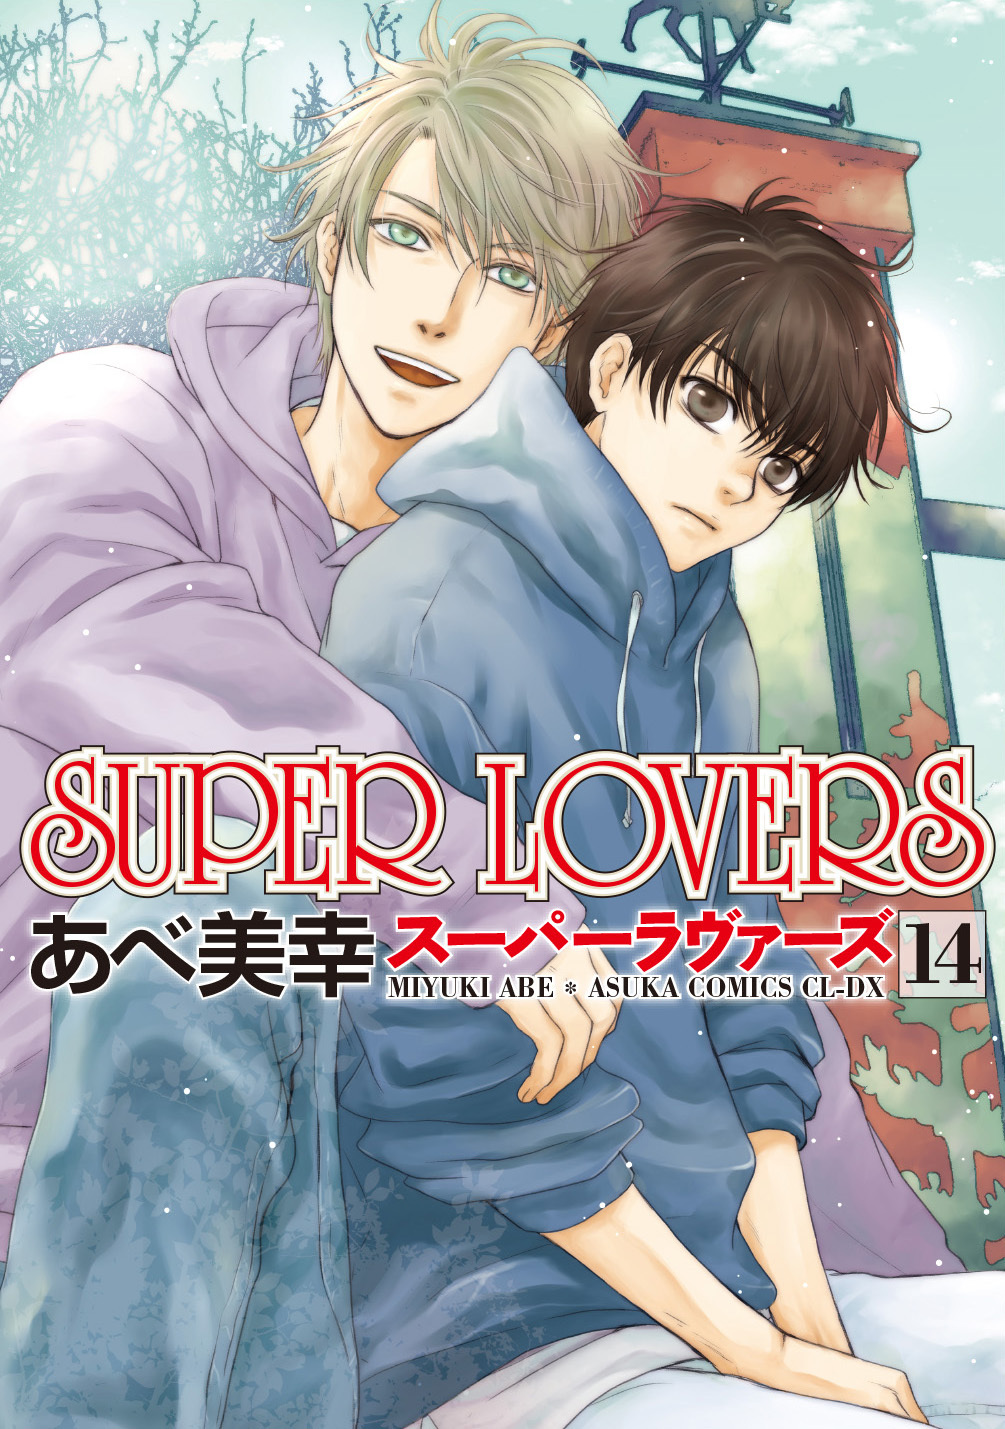 BL漫画「SUPER LOVERS 14」9月1日发售 新封面抢先公开